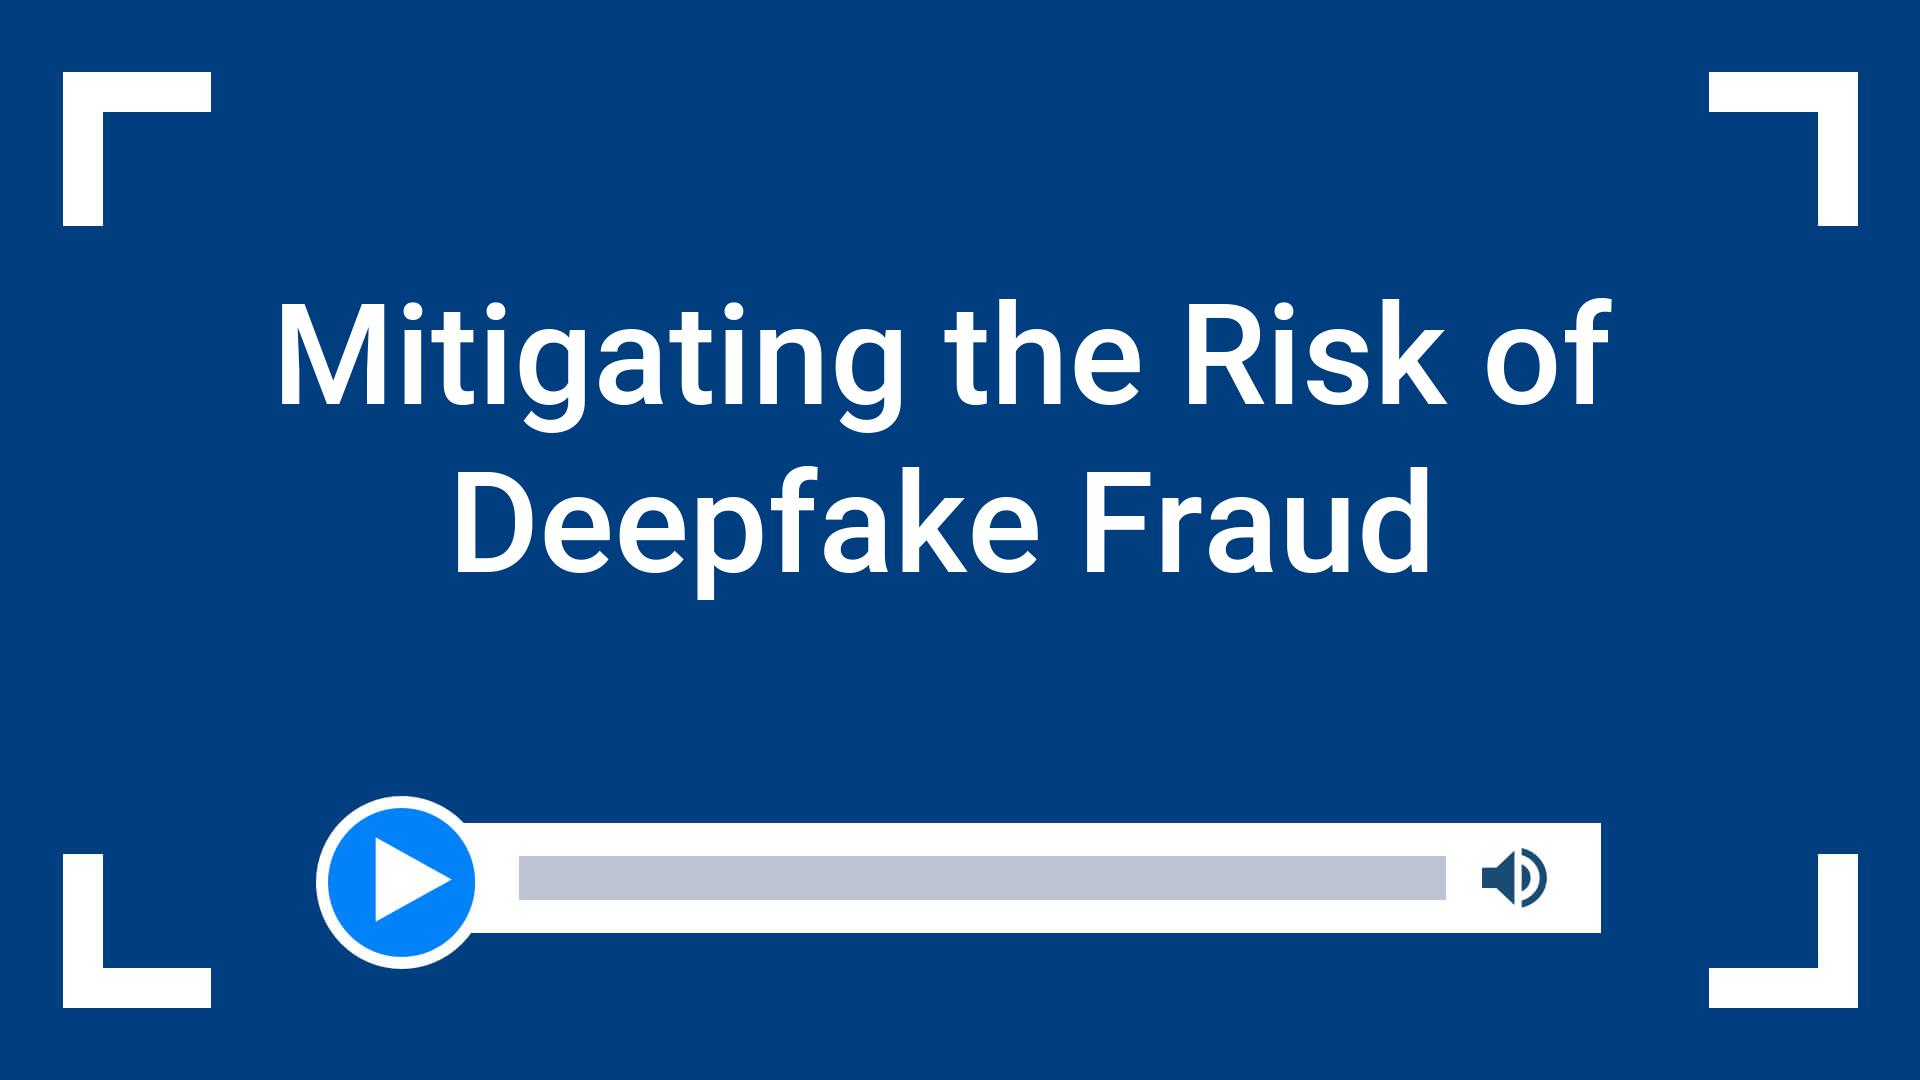 Mitigating the Risk of Deepfake Fraud